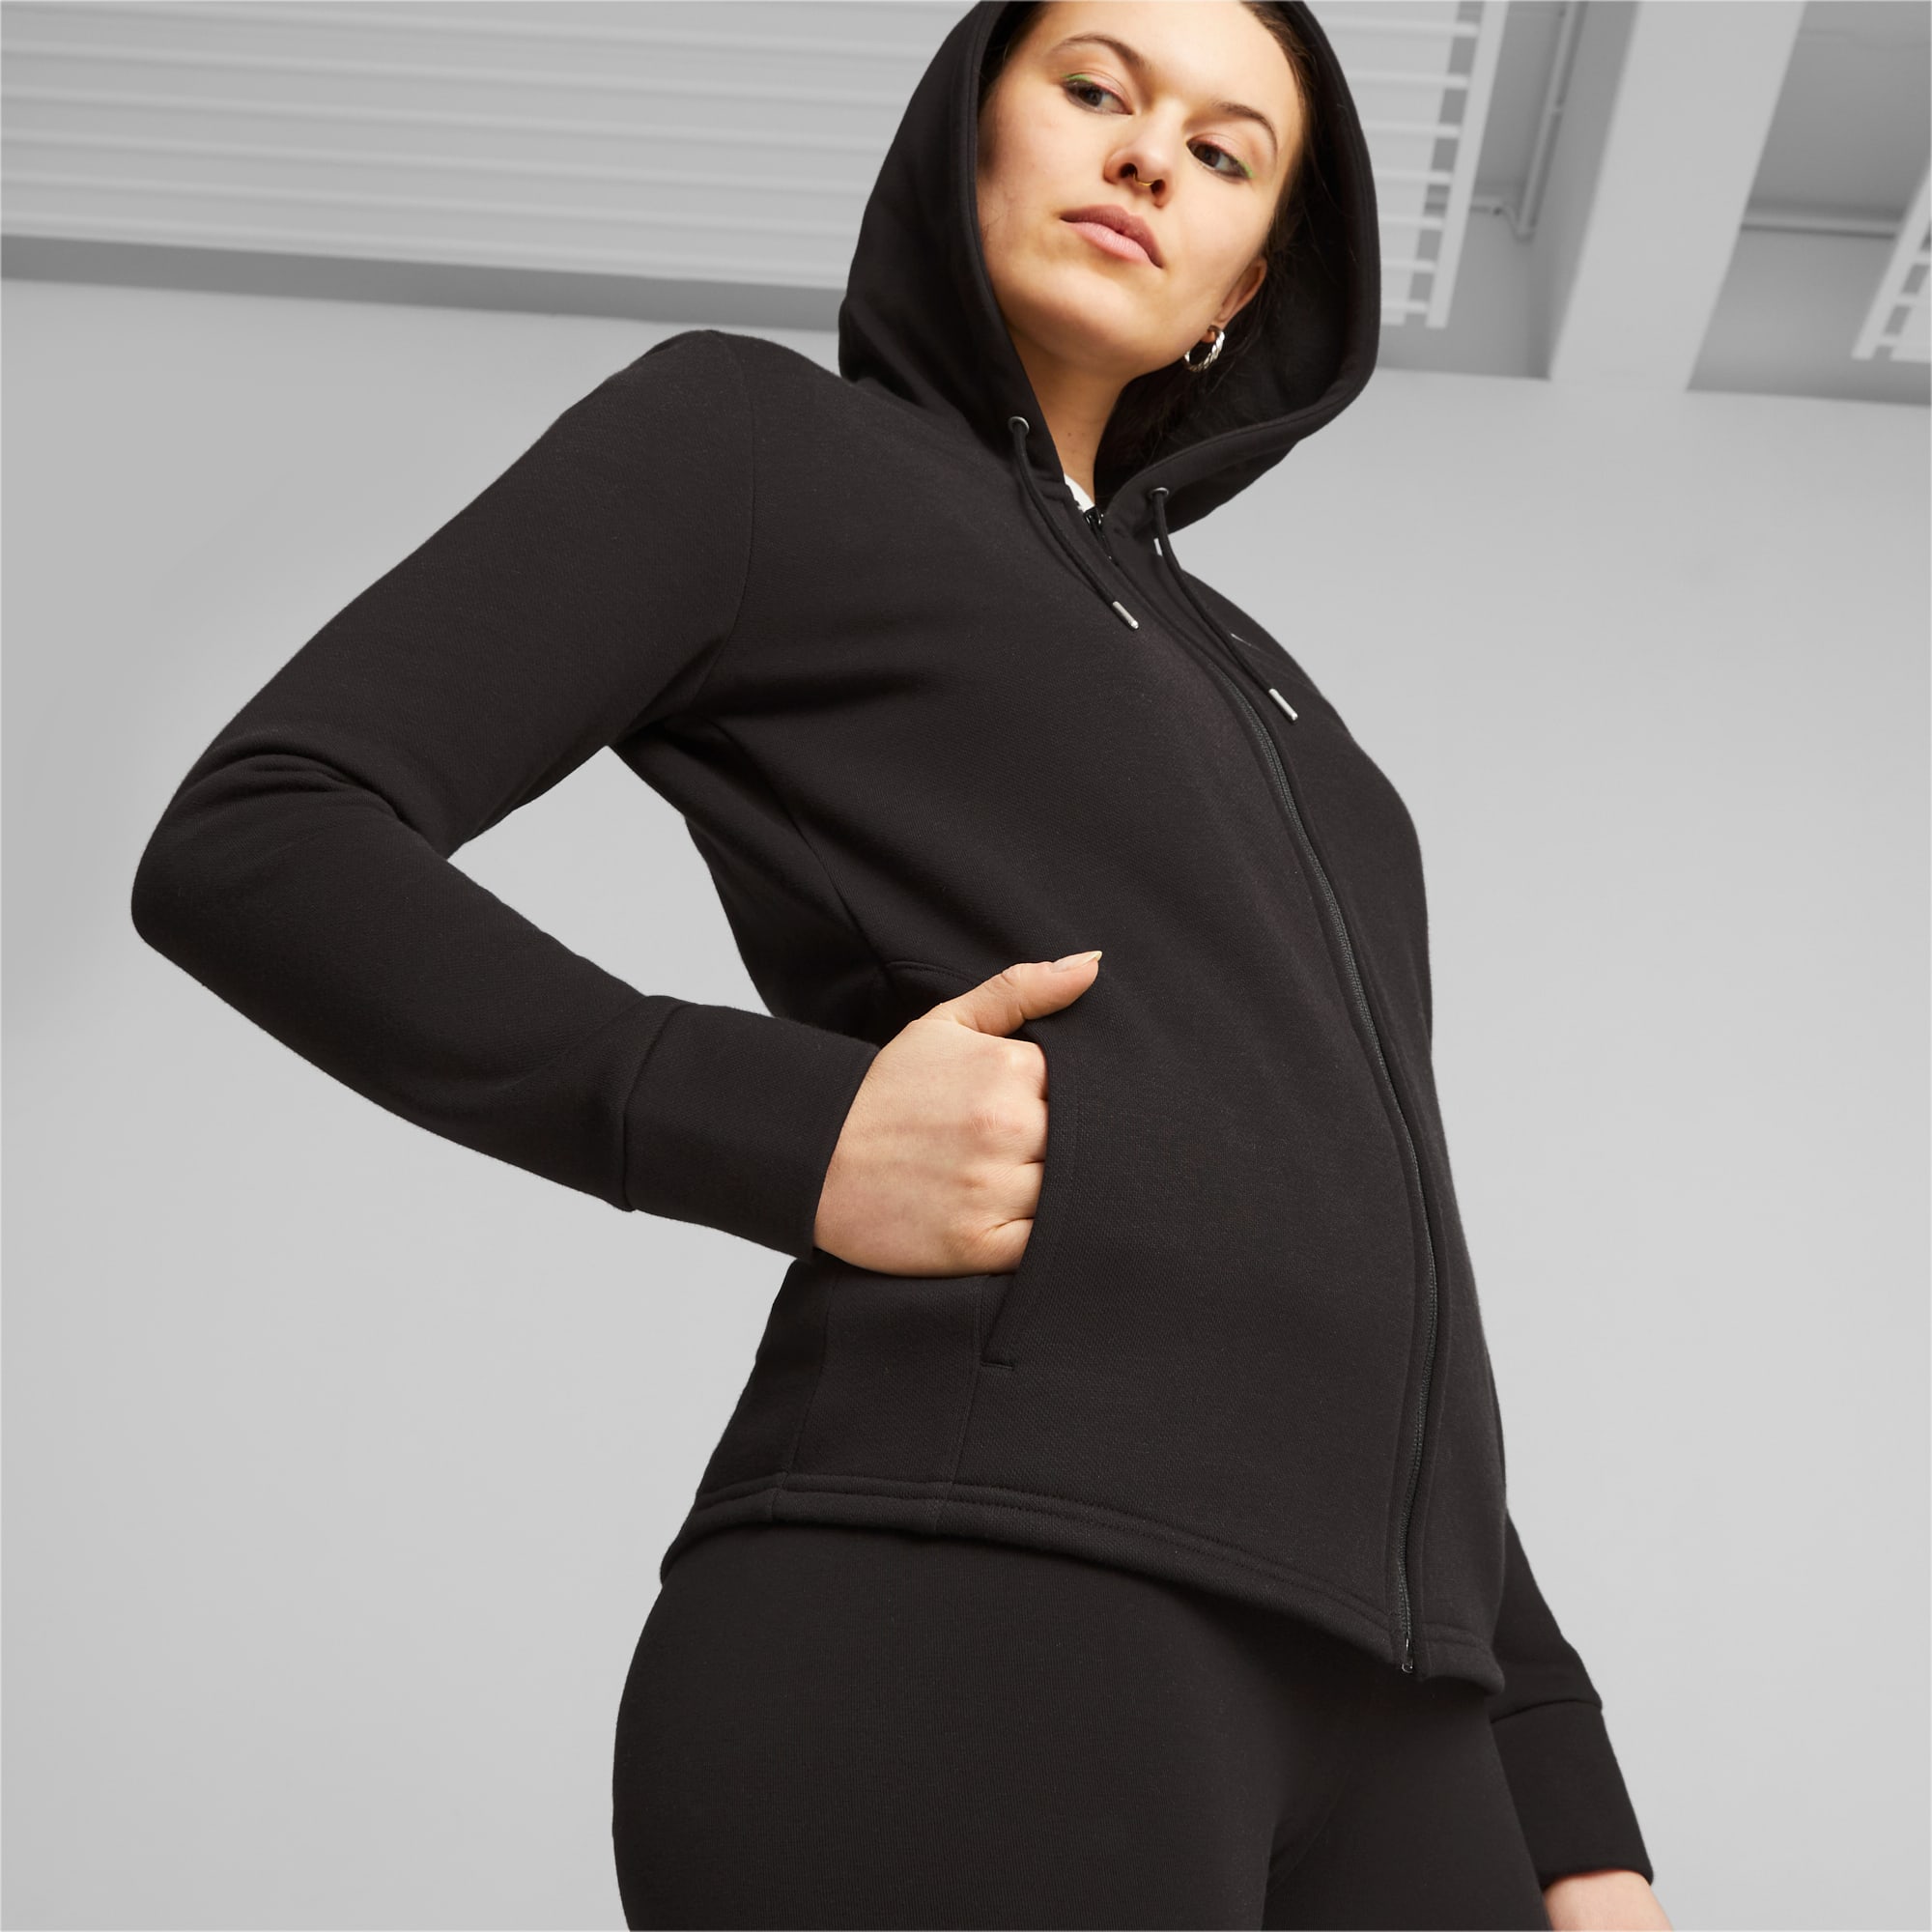 PUMA Women's Metallic Tracksuit, Black, Size XL, Clothing